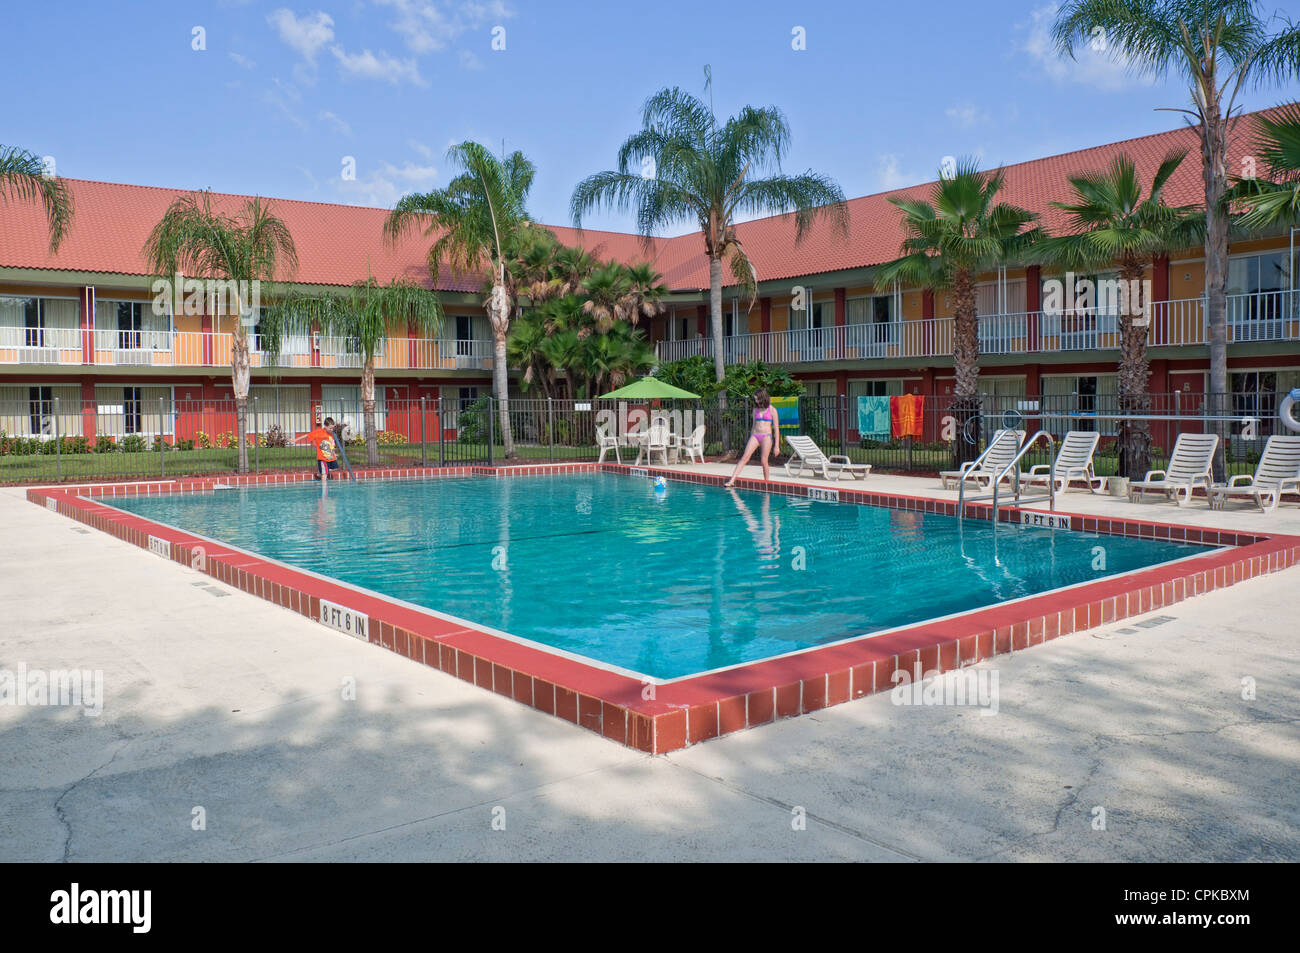 Days Inn motel pool area Cocoa Florida Stock Photo